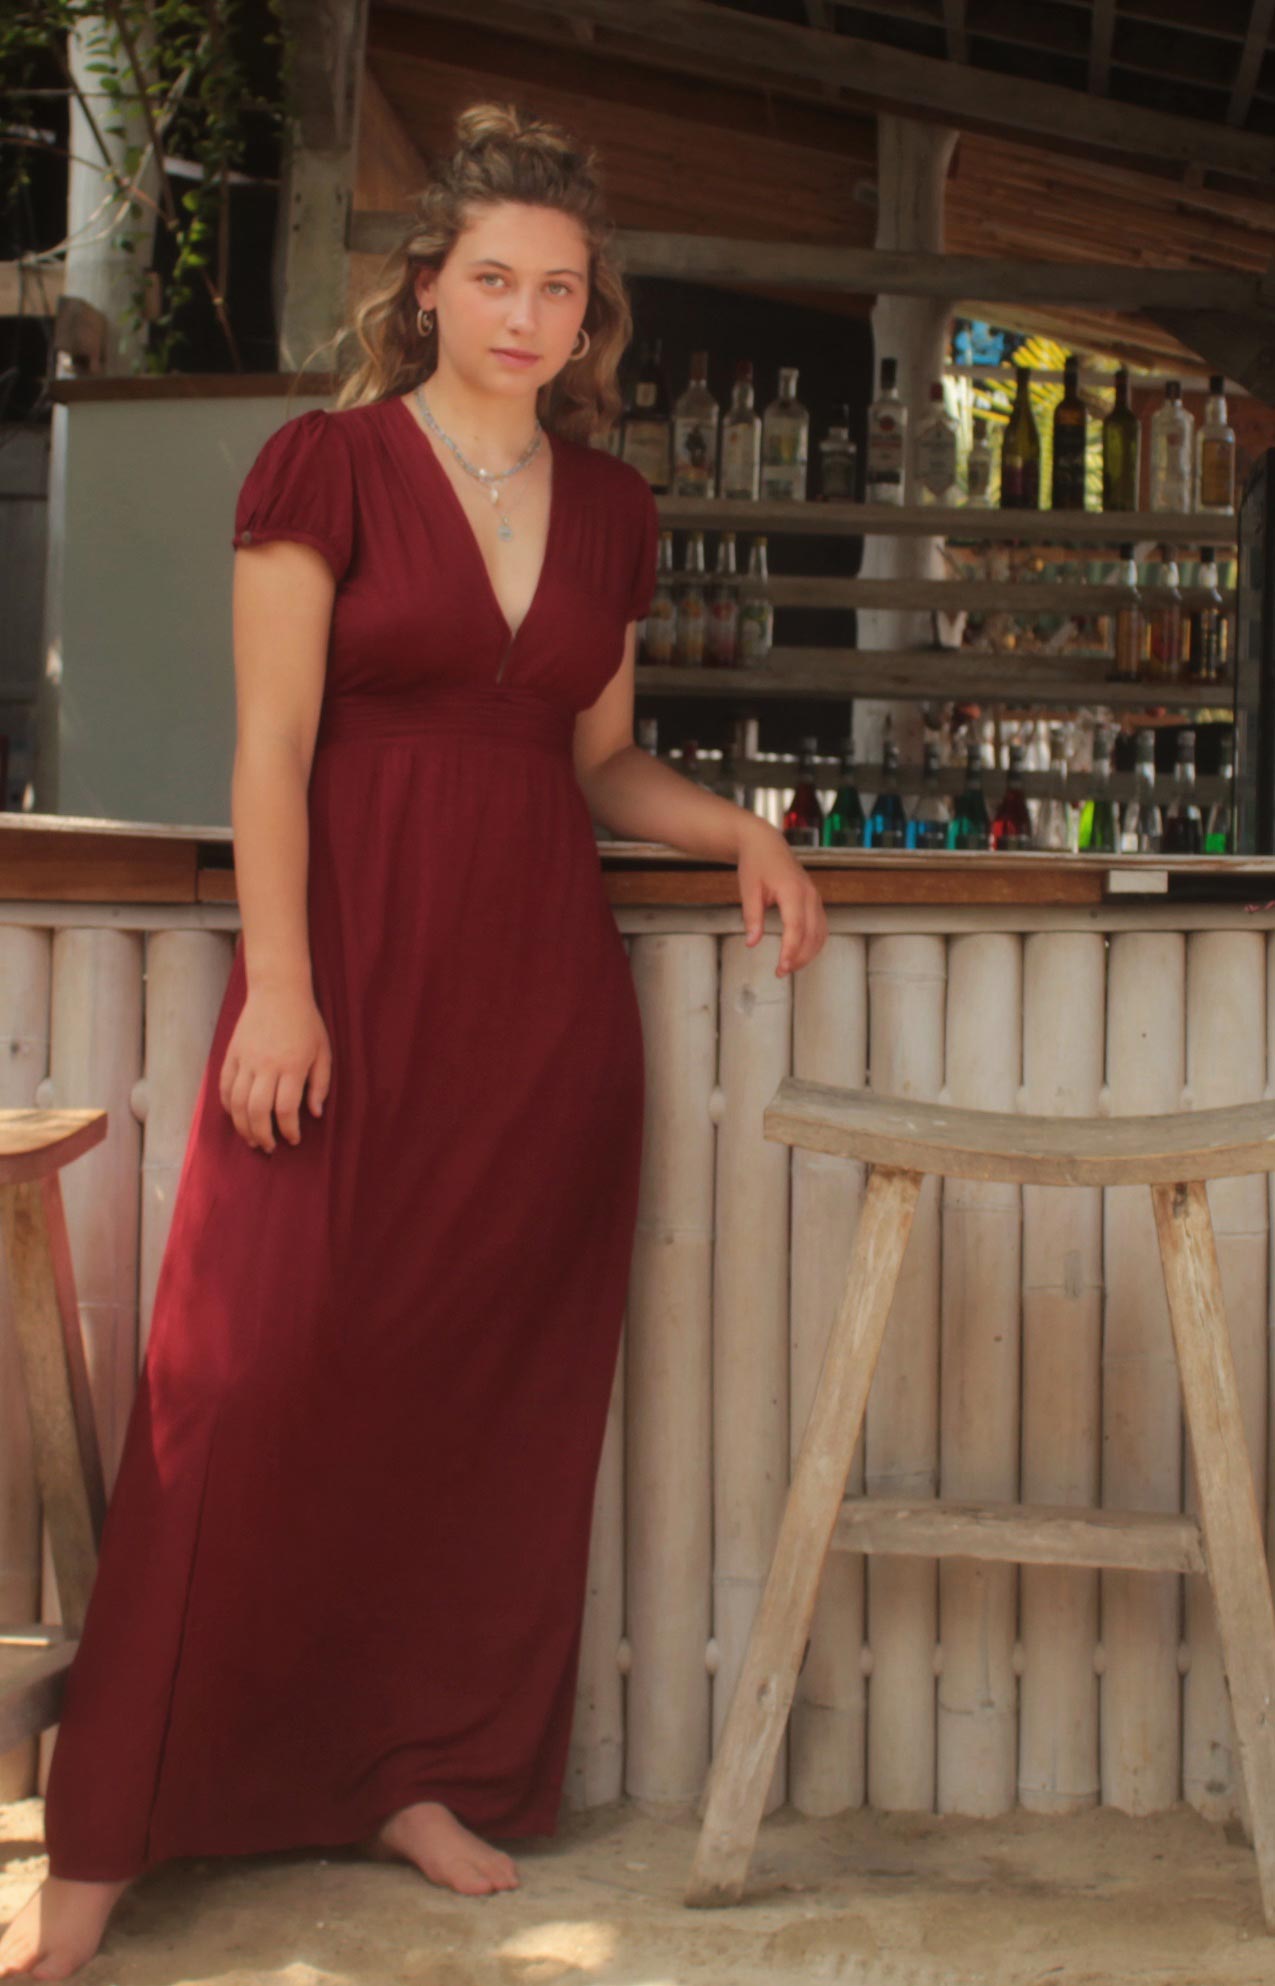 Elegant-Gown-long-red-maxi-dress-evening-prom-bridesmaid-wedding-guest-dress